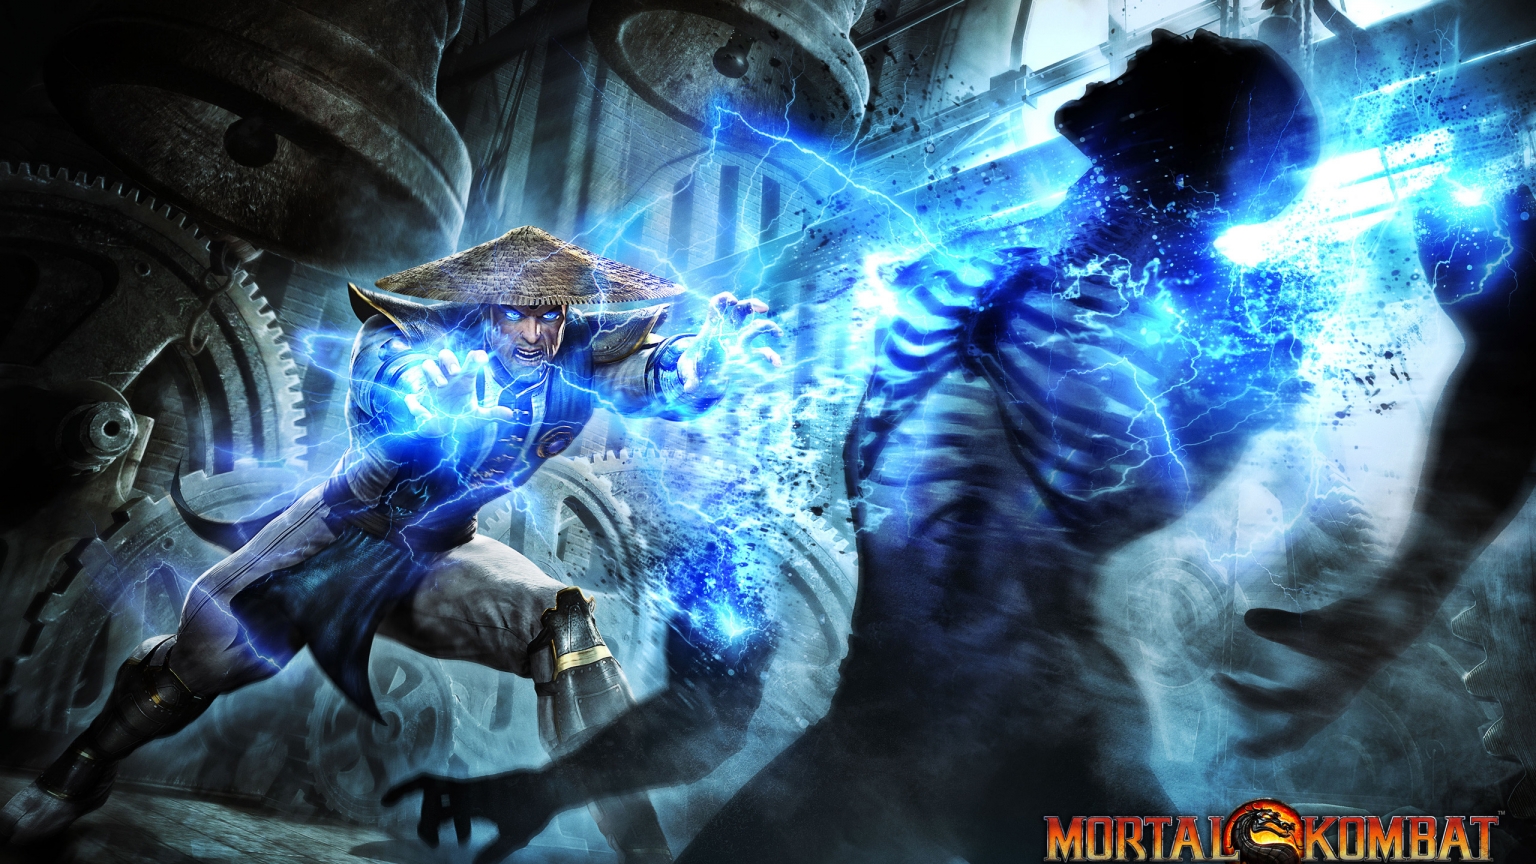 Mortal Kombat Raiden for 1536 x 864 HDTV resolution